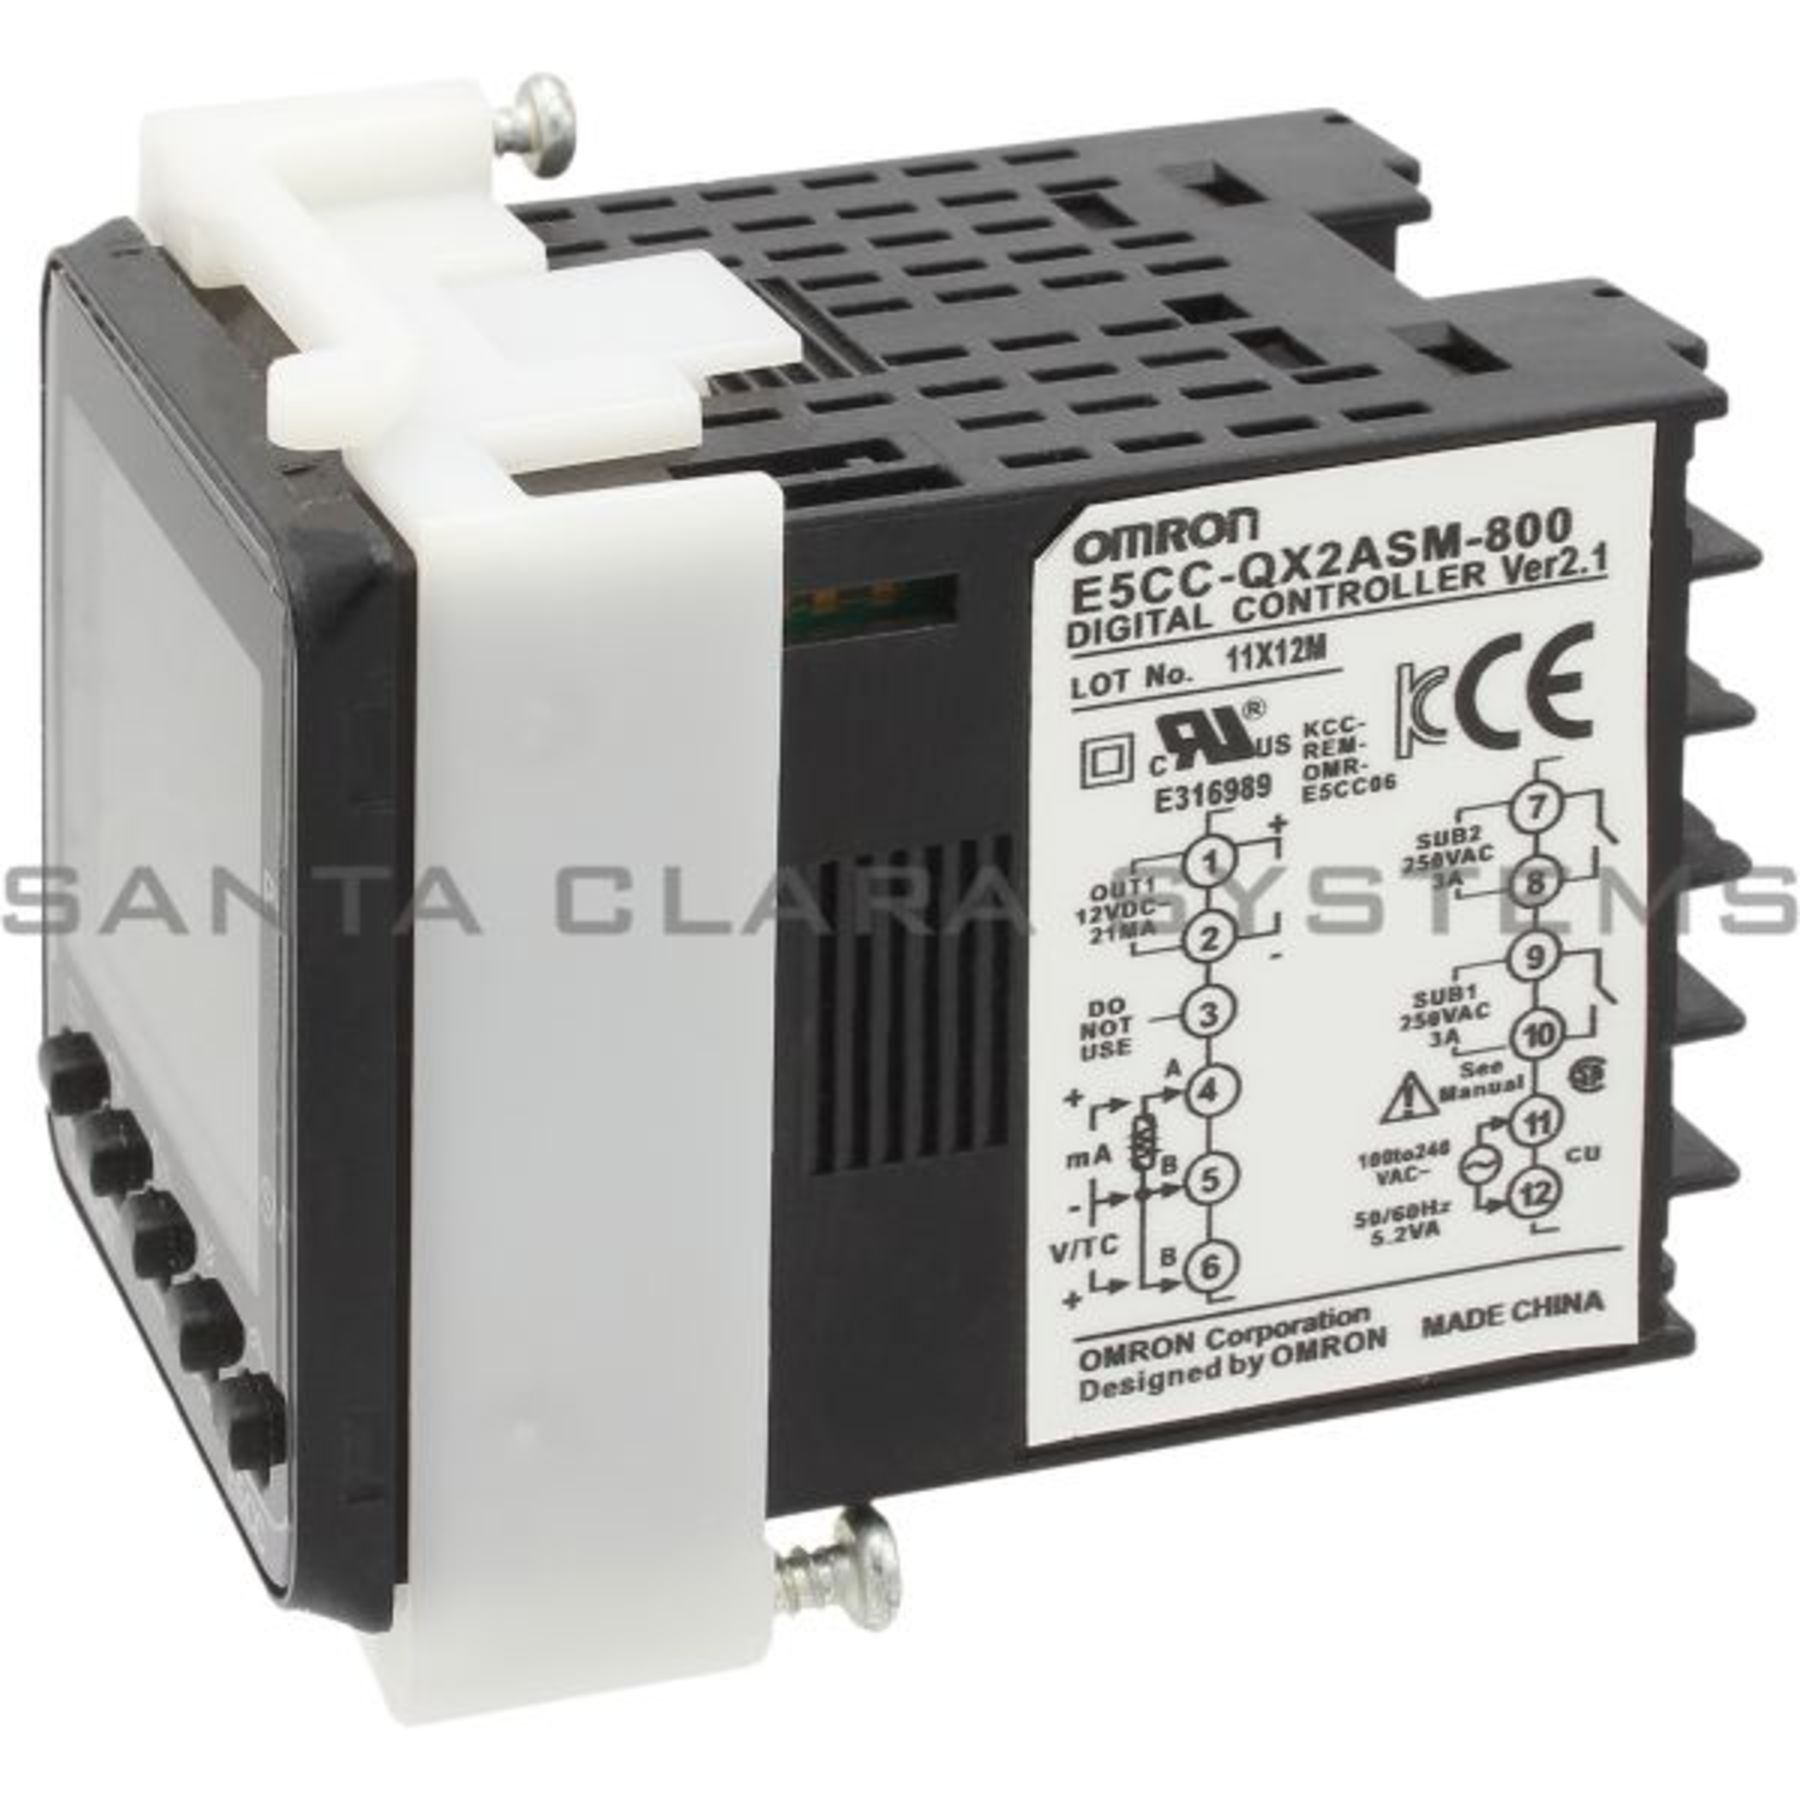 E5CC-QX2ASM-800 Temperature Controller Omron In Stock - Santa